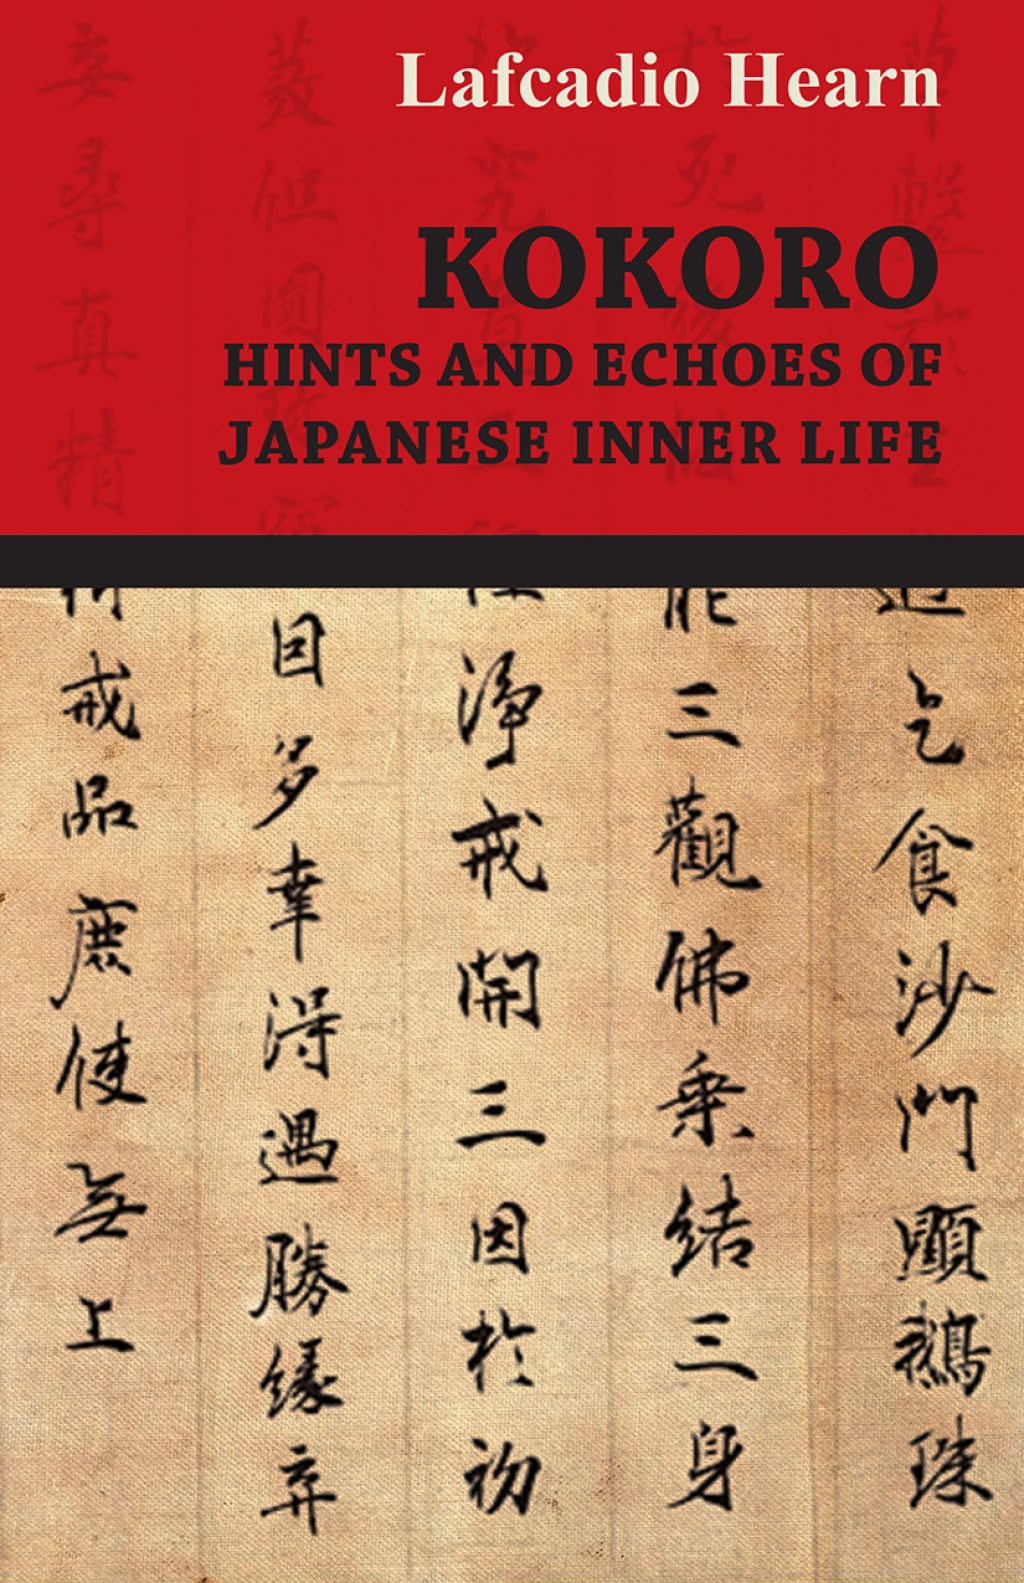 Kokoro - Hints and Echoes of Japanese Inner Life (eBook) - Lafcadio Hearn